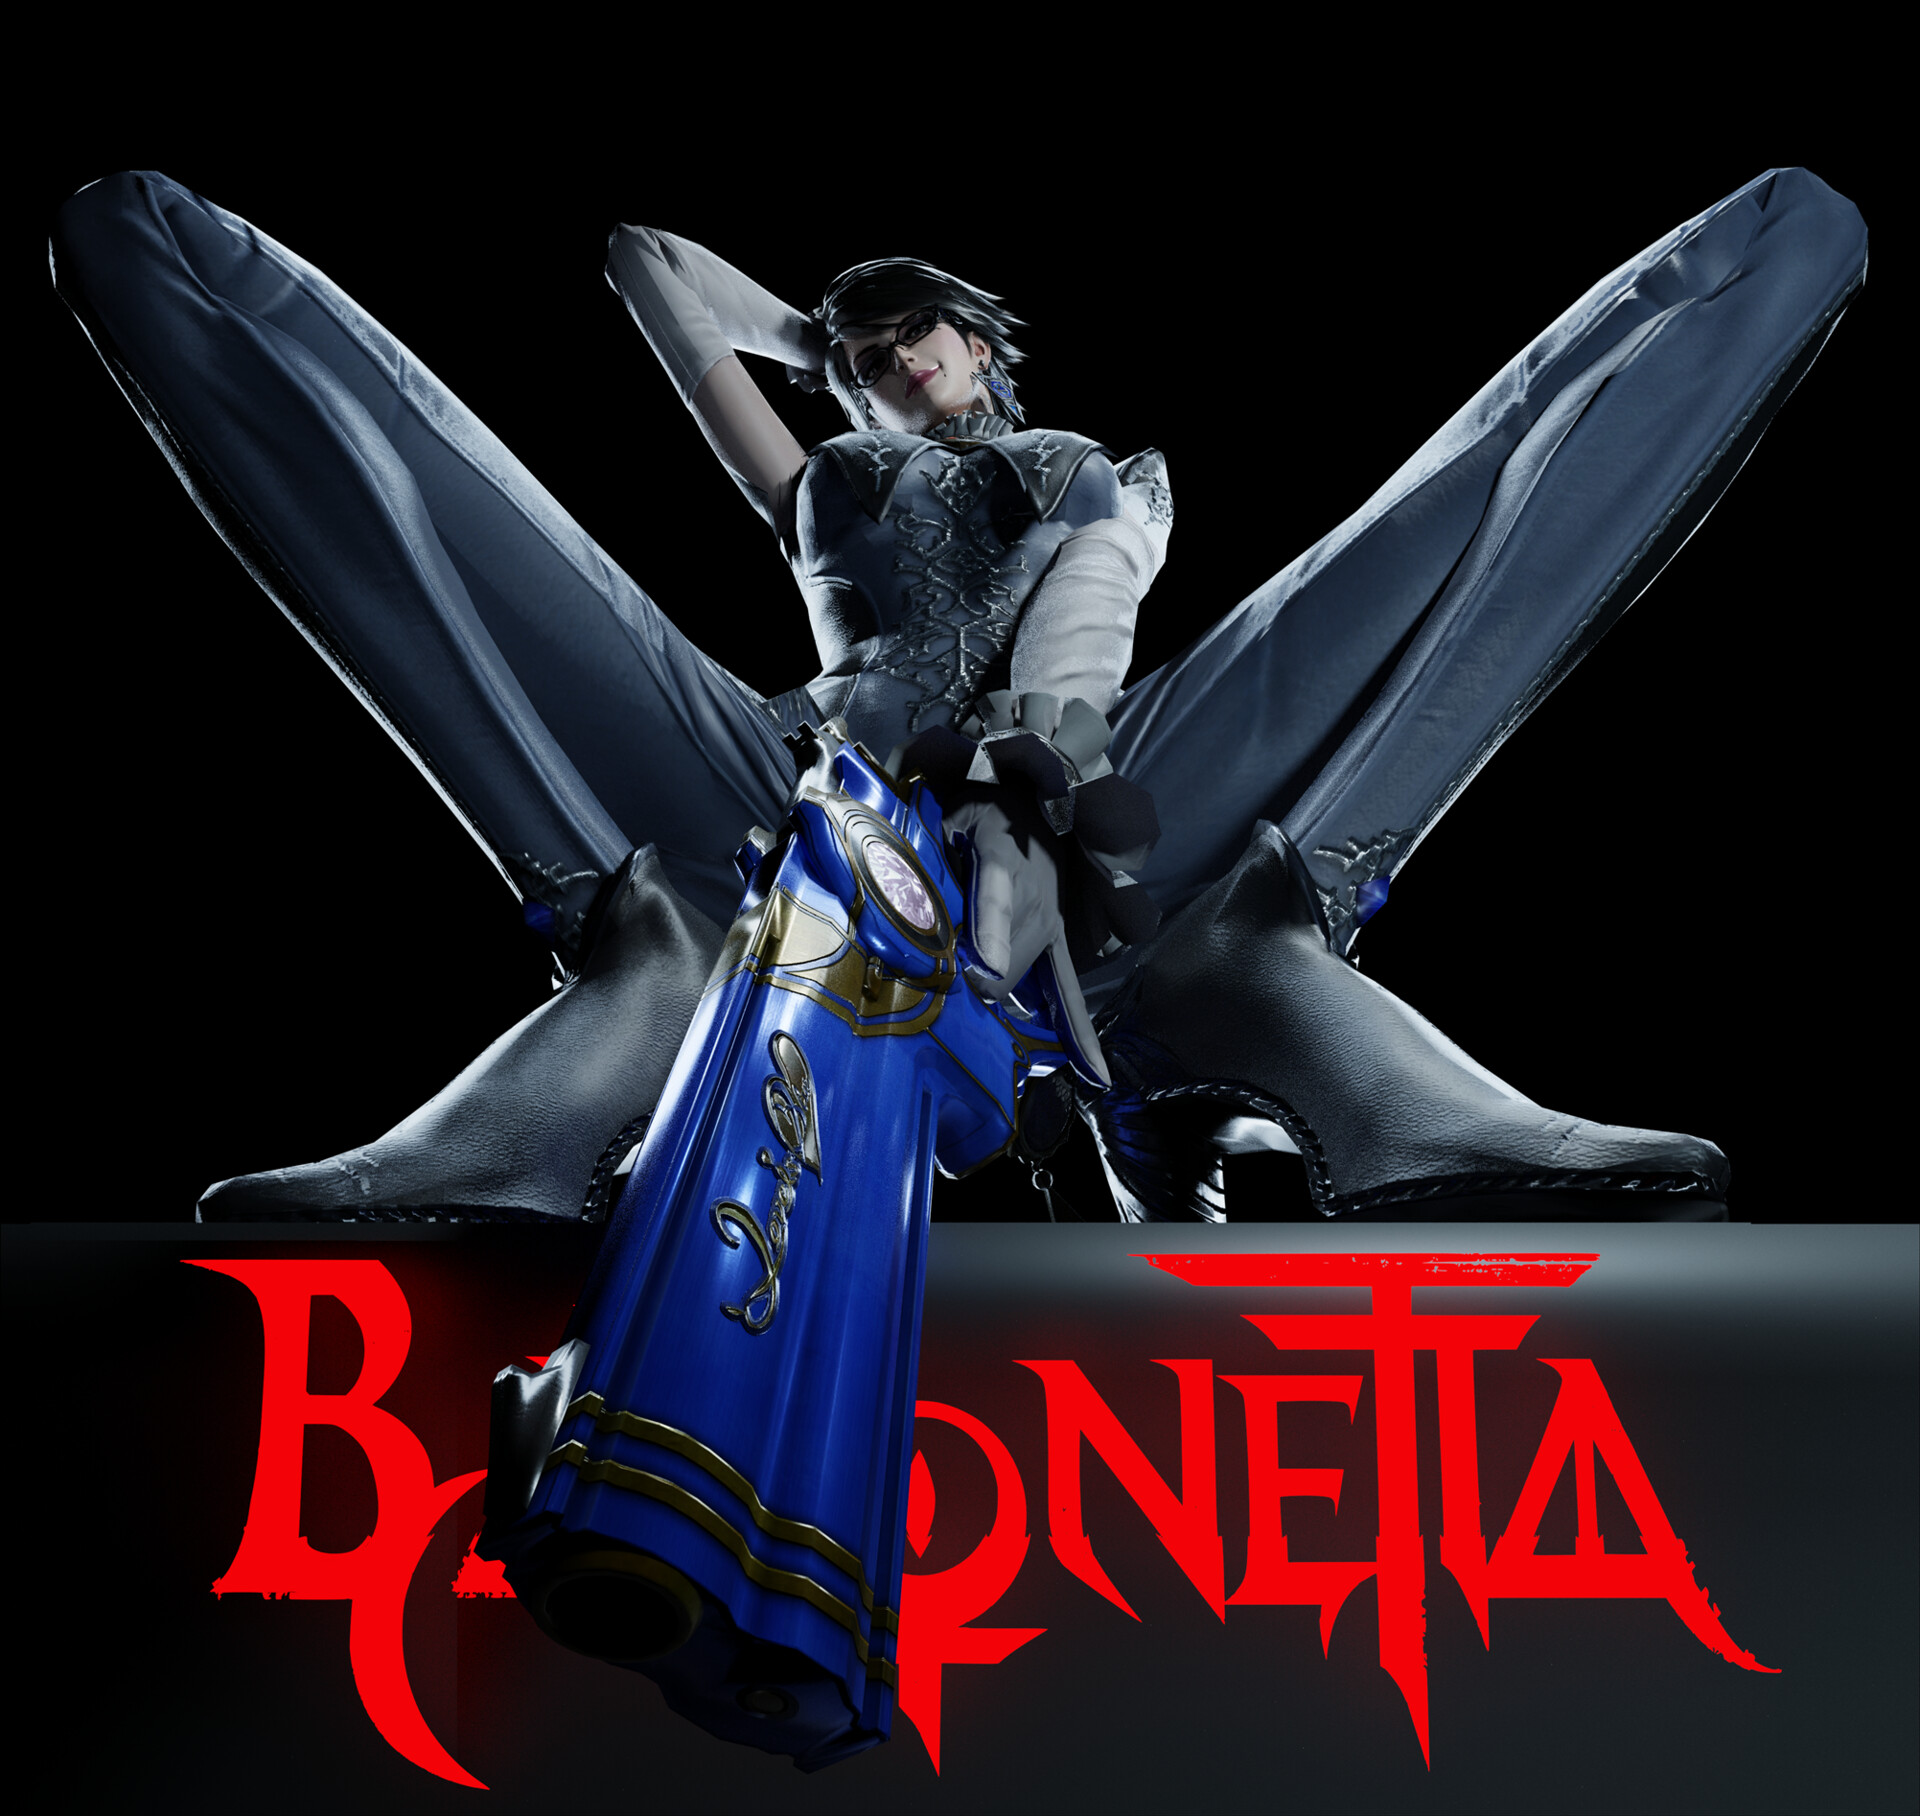 ArtStation - Bayonetta 2